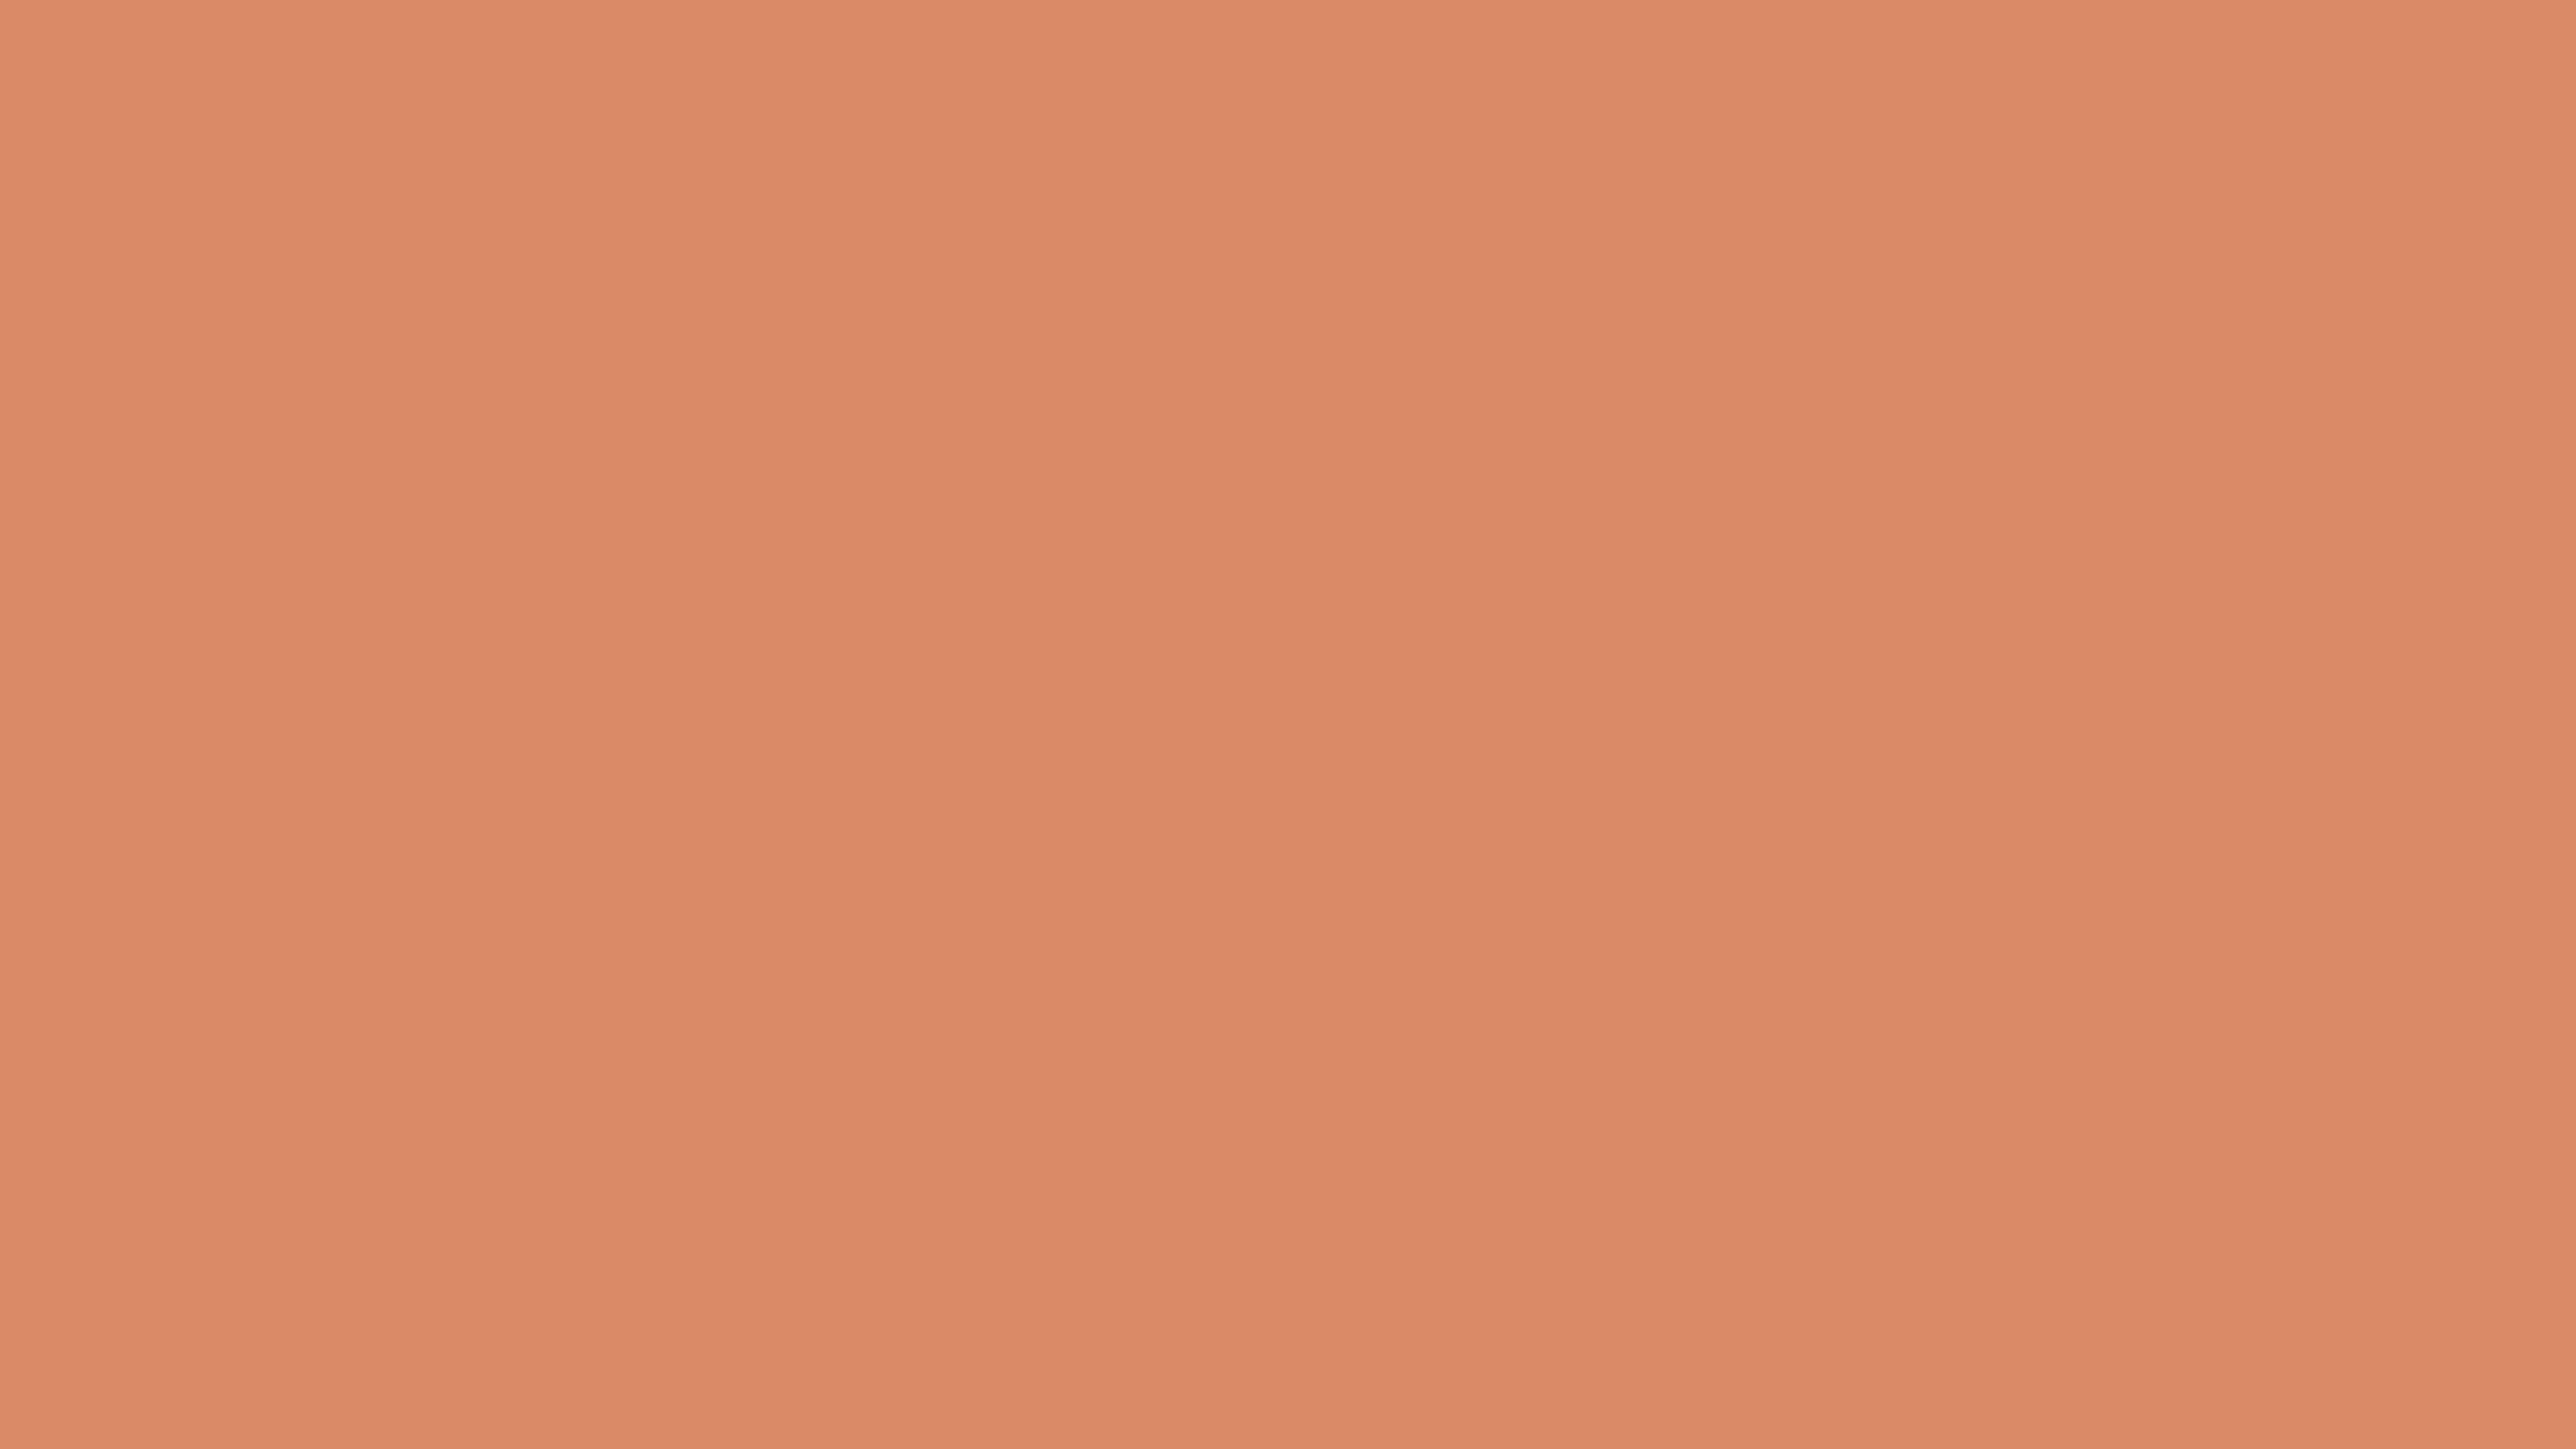 5120x2880 Copper Crayola Solid Color Background